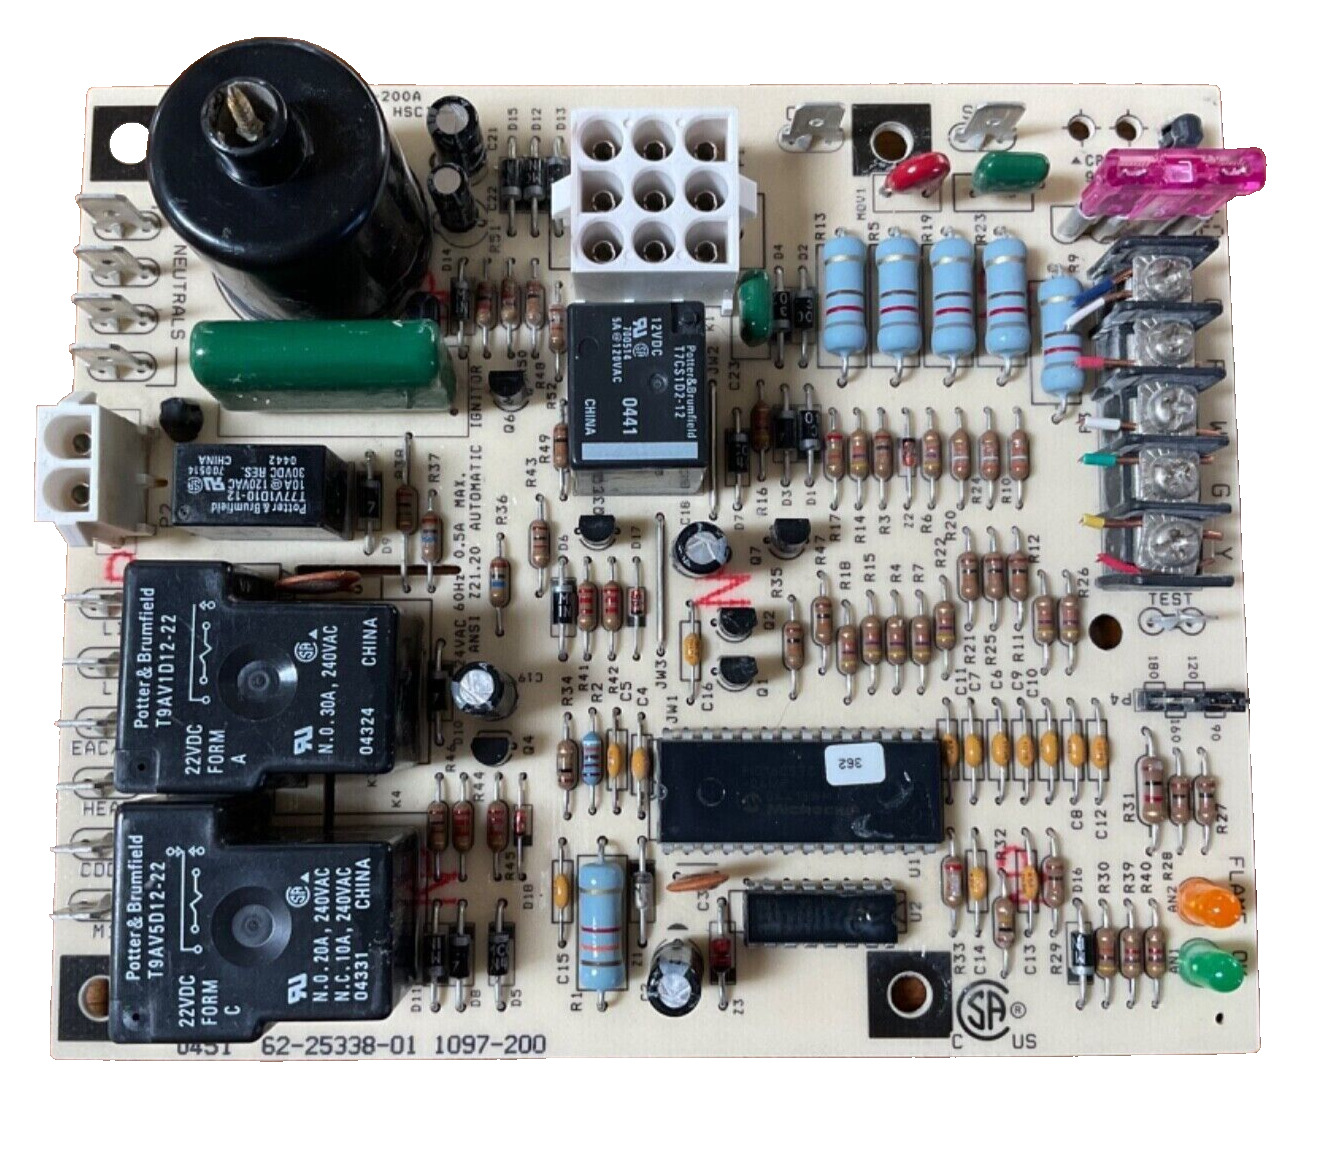 Rheem Ruud 62-25338-01 Control Circuit Board 1097-200 used tested working fast